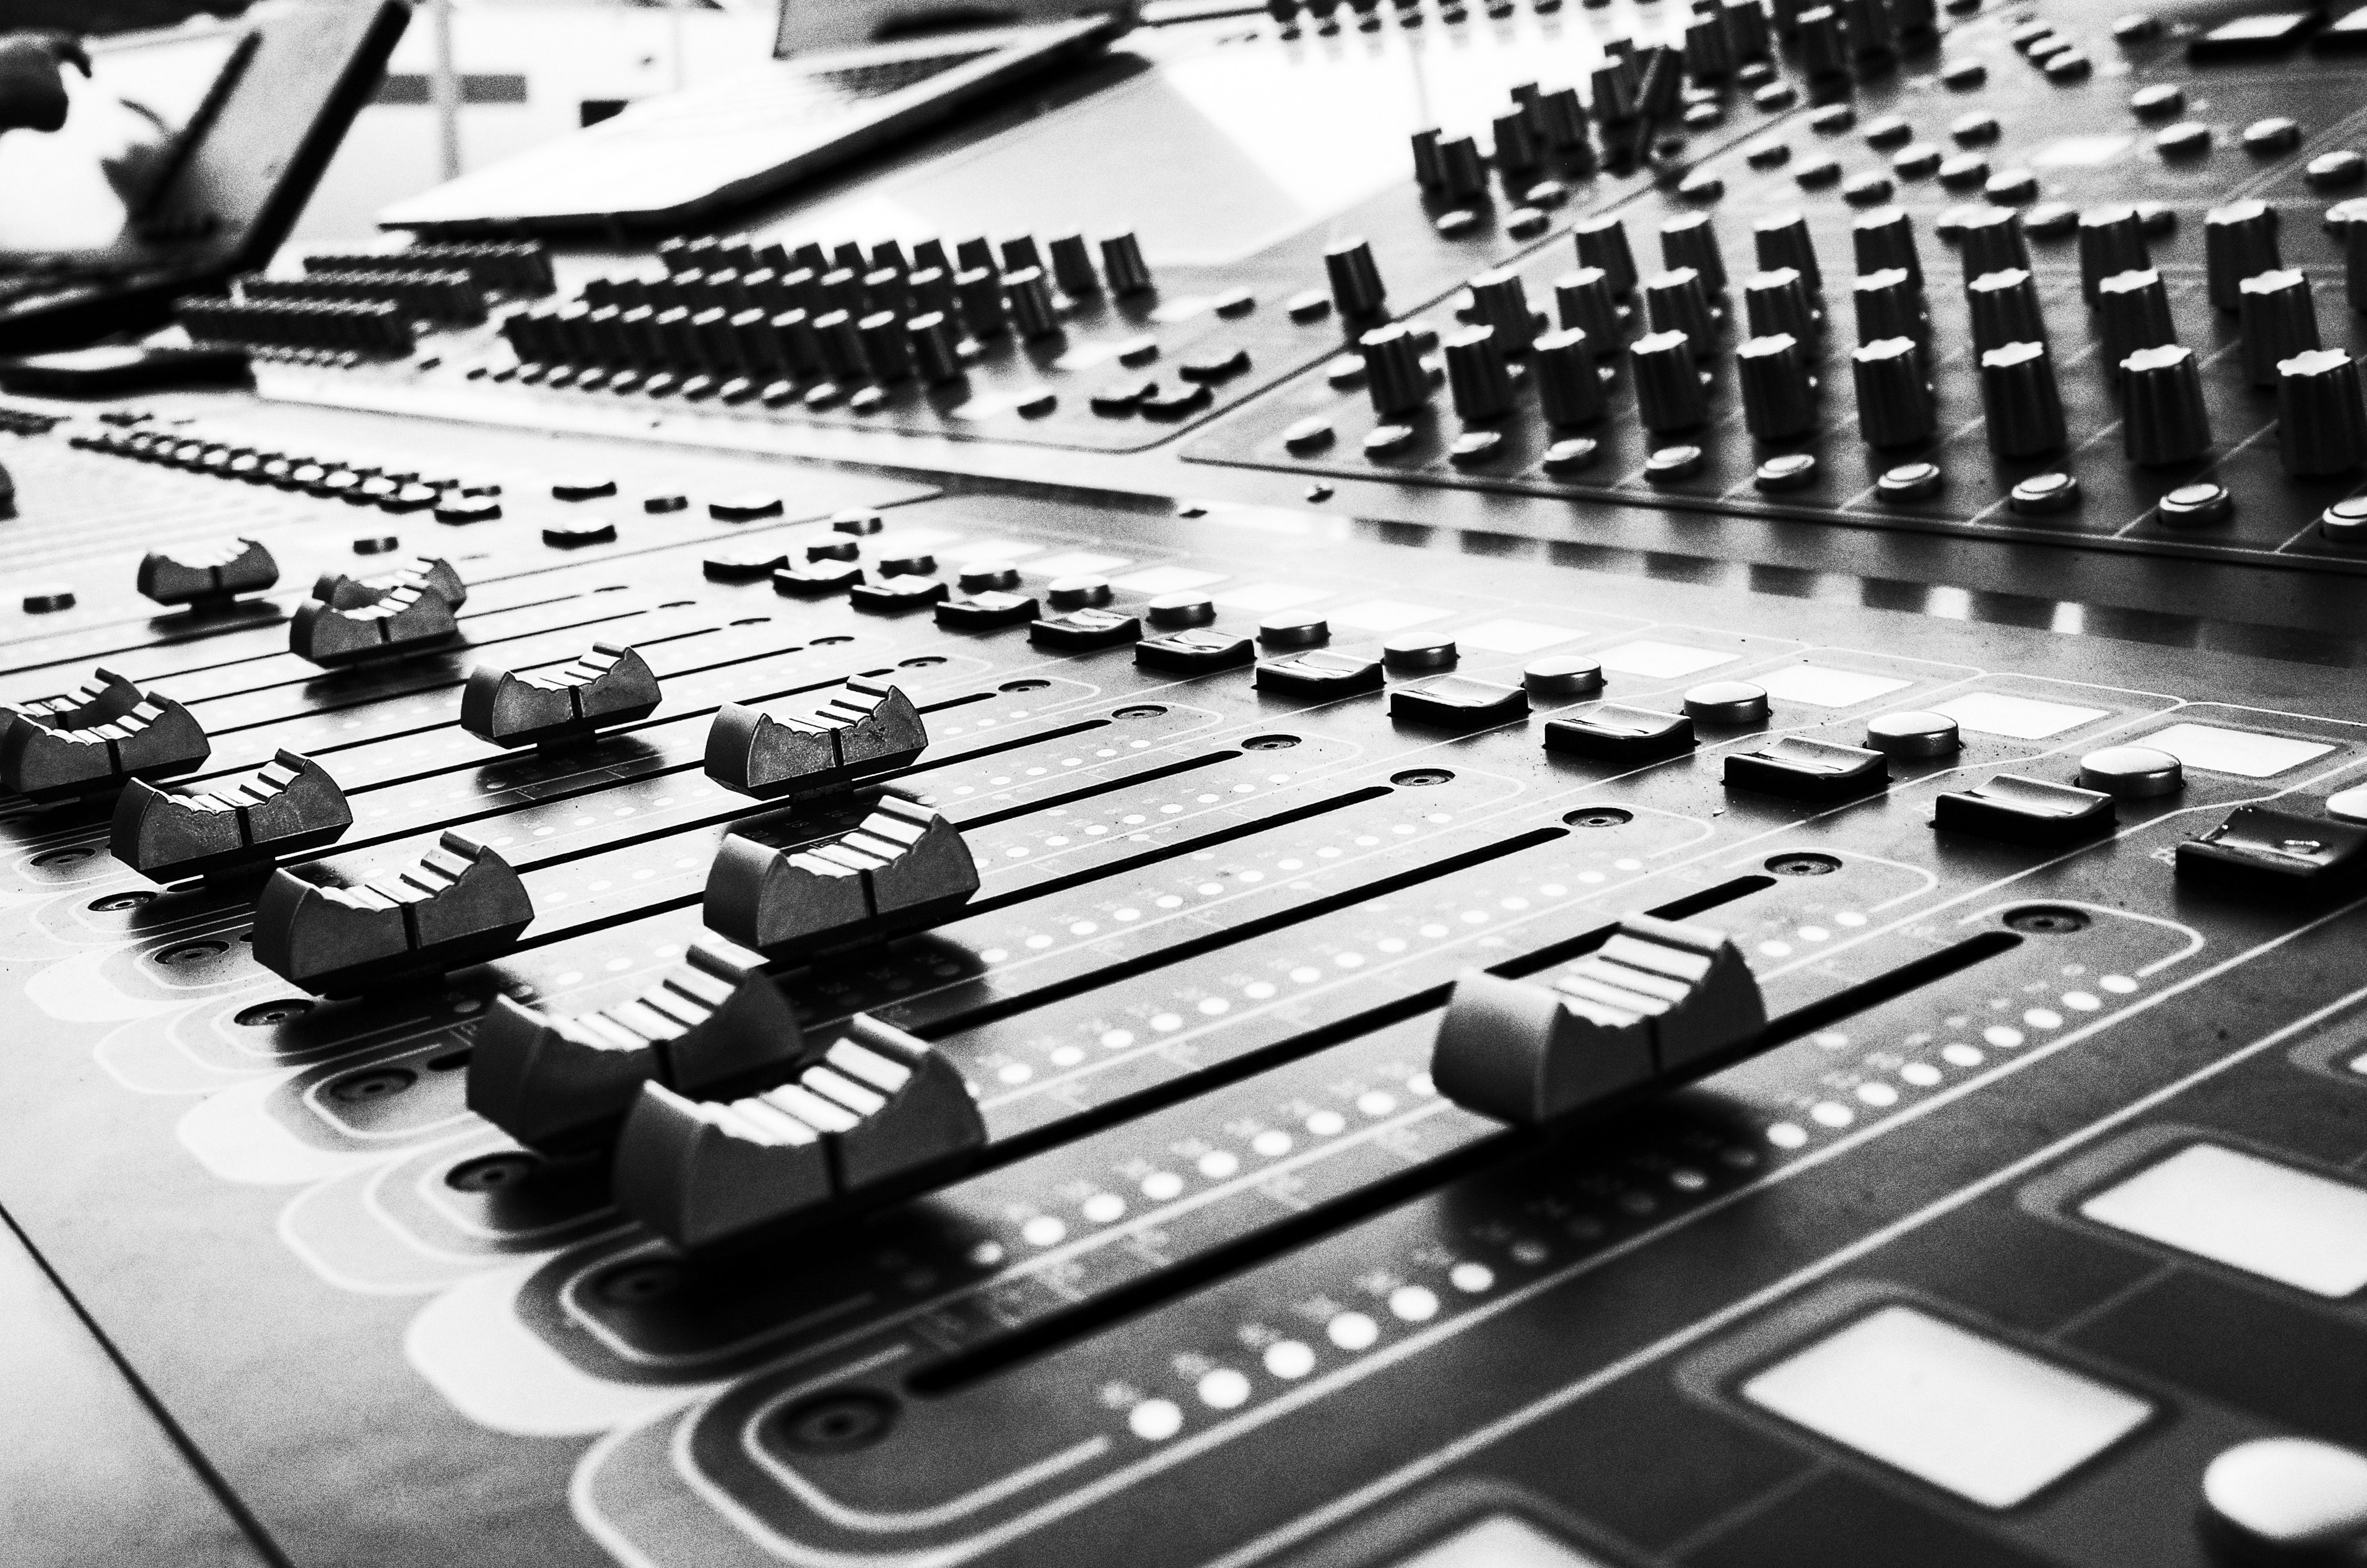 Closeup photo of an audio mixing board